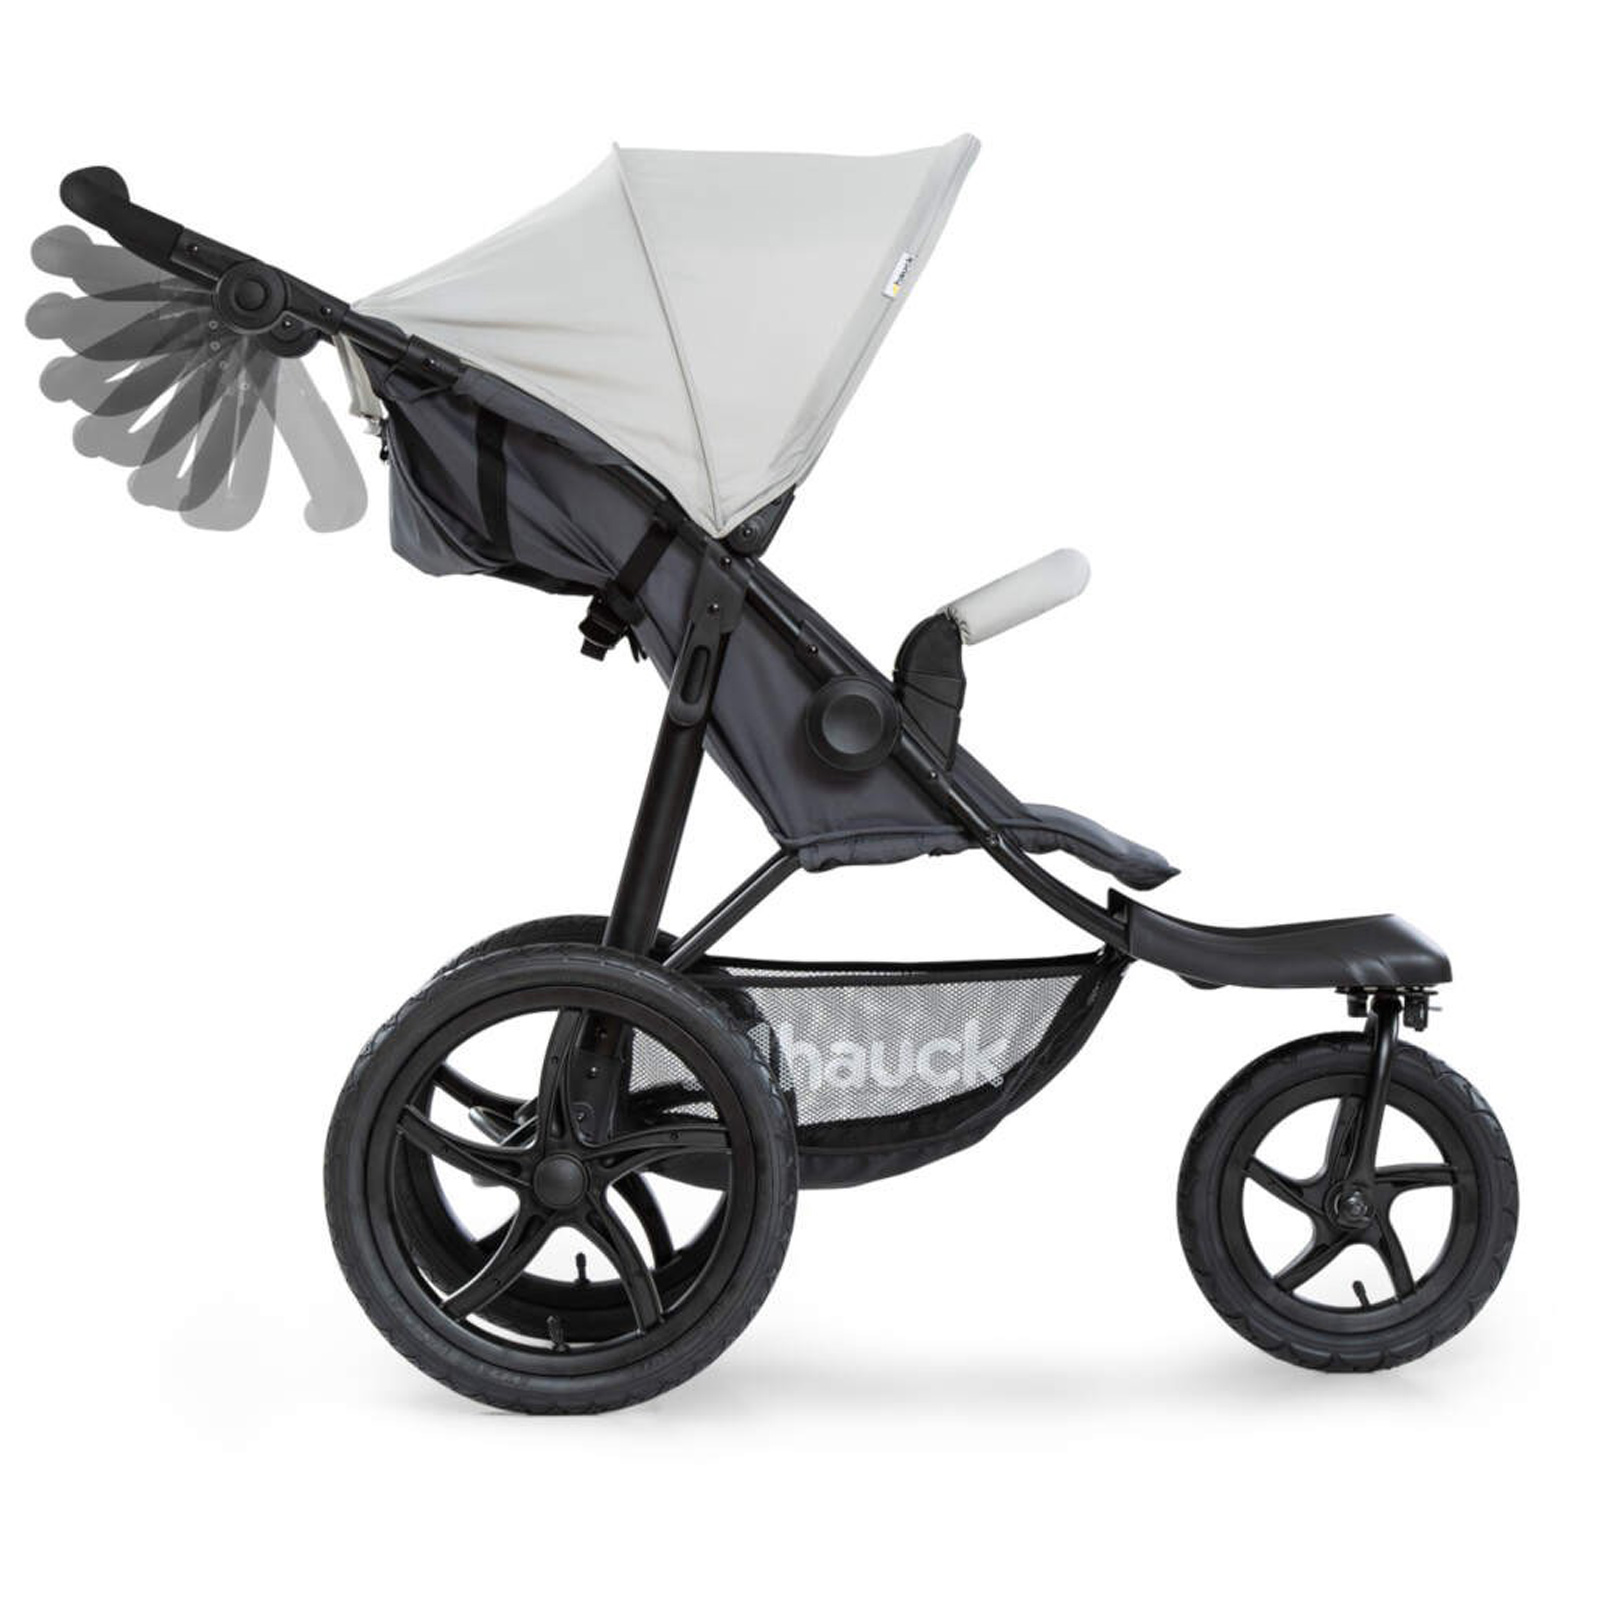 Hauck Runner 3 Wheel Pushchair - Silver / Grey | Buy at Online4baby